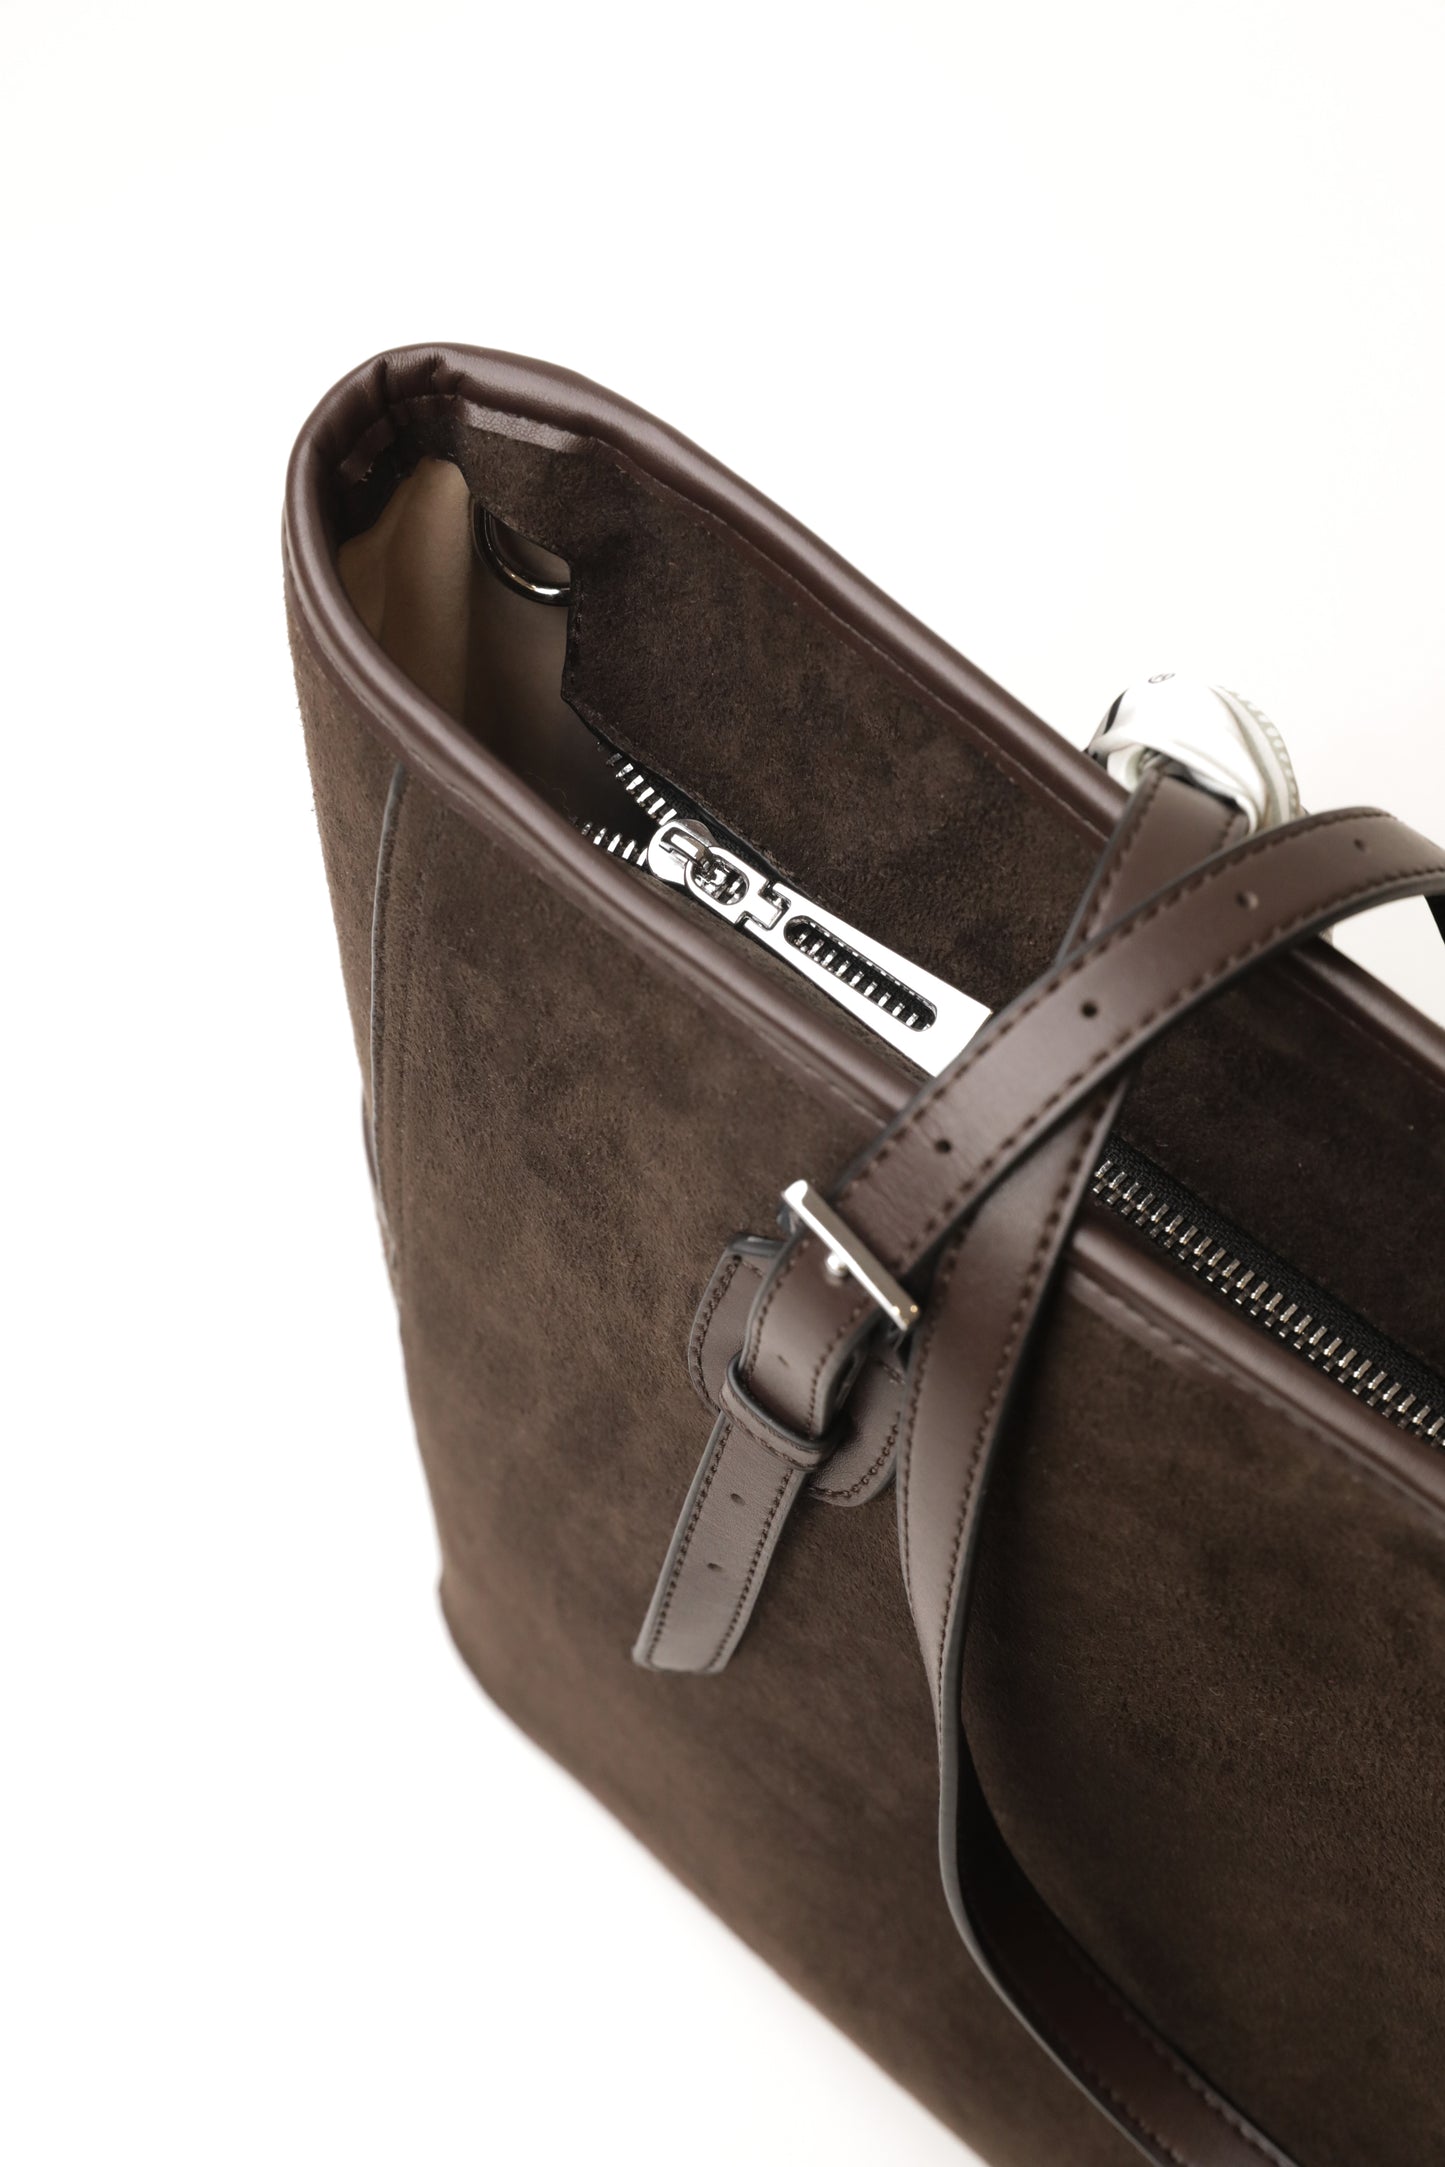 Liz Jordan-Hill Luxury Upcycled Suede Leather Carryall Tote Shoulder Bag